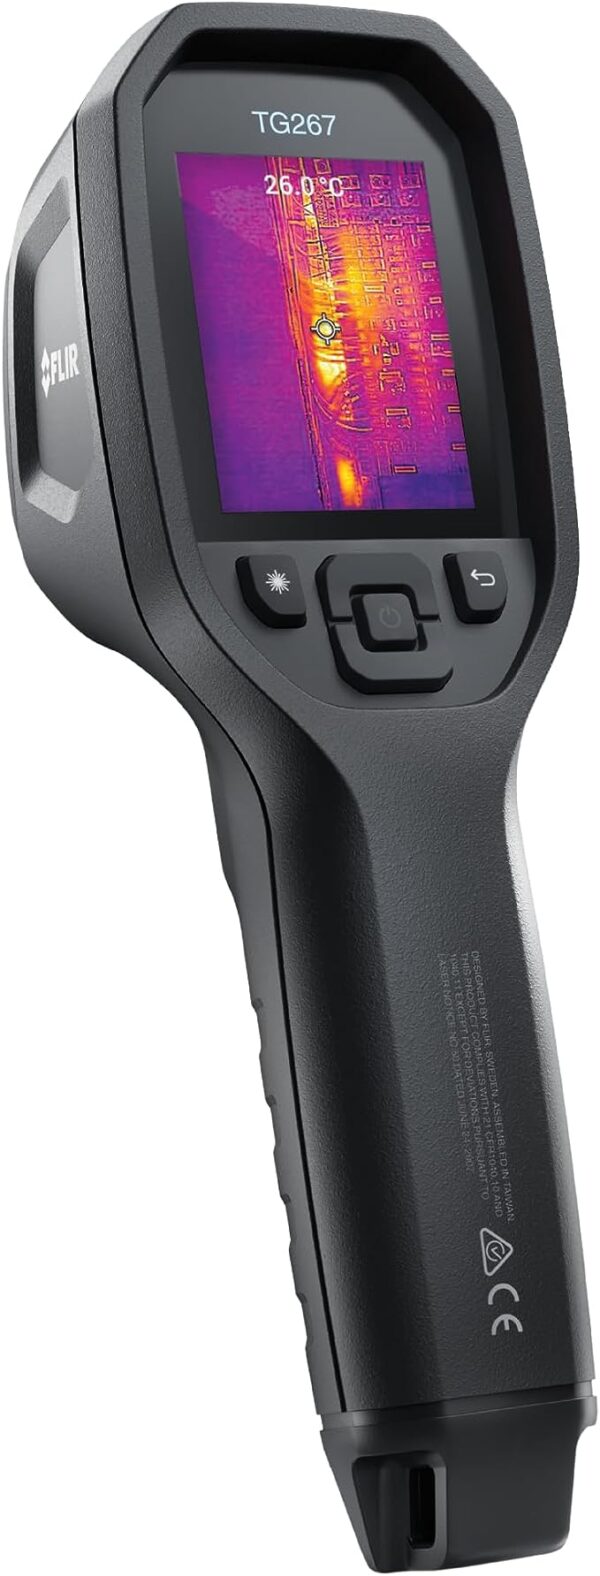 FLIR TG267 Thermal Imaging Camera with Bullseye Laser 1